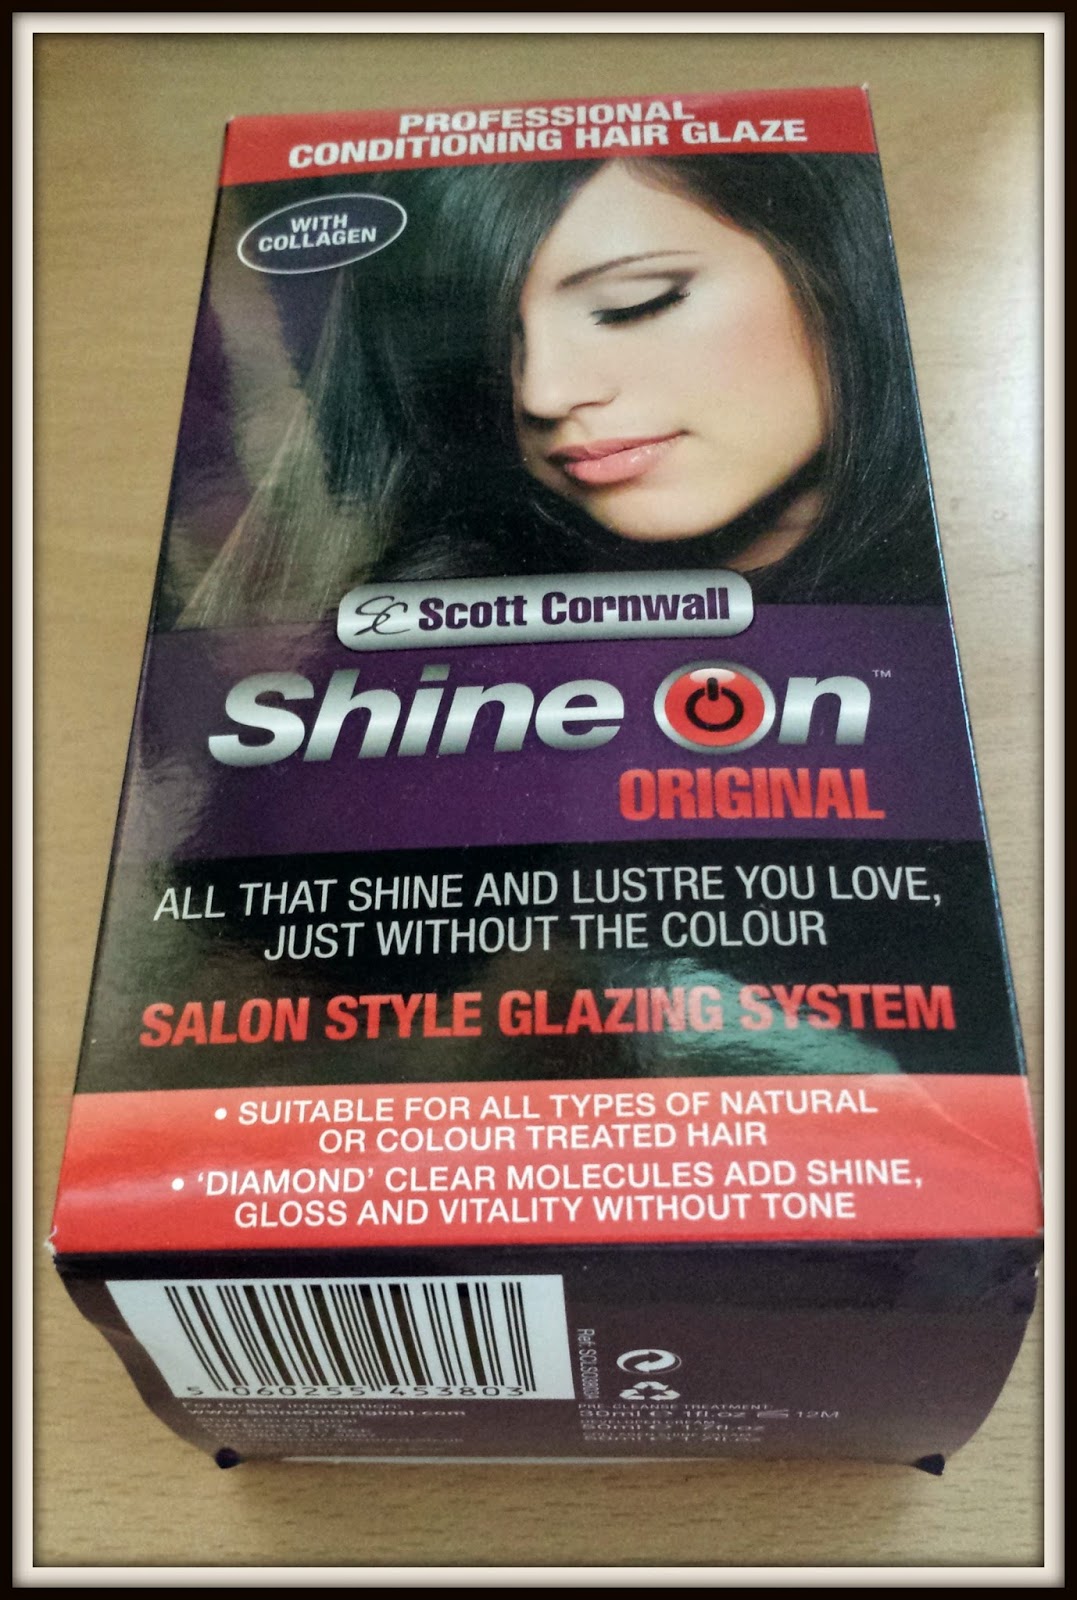 Make your hair shine with Shine on Original Glaze treatment